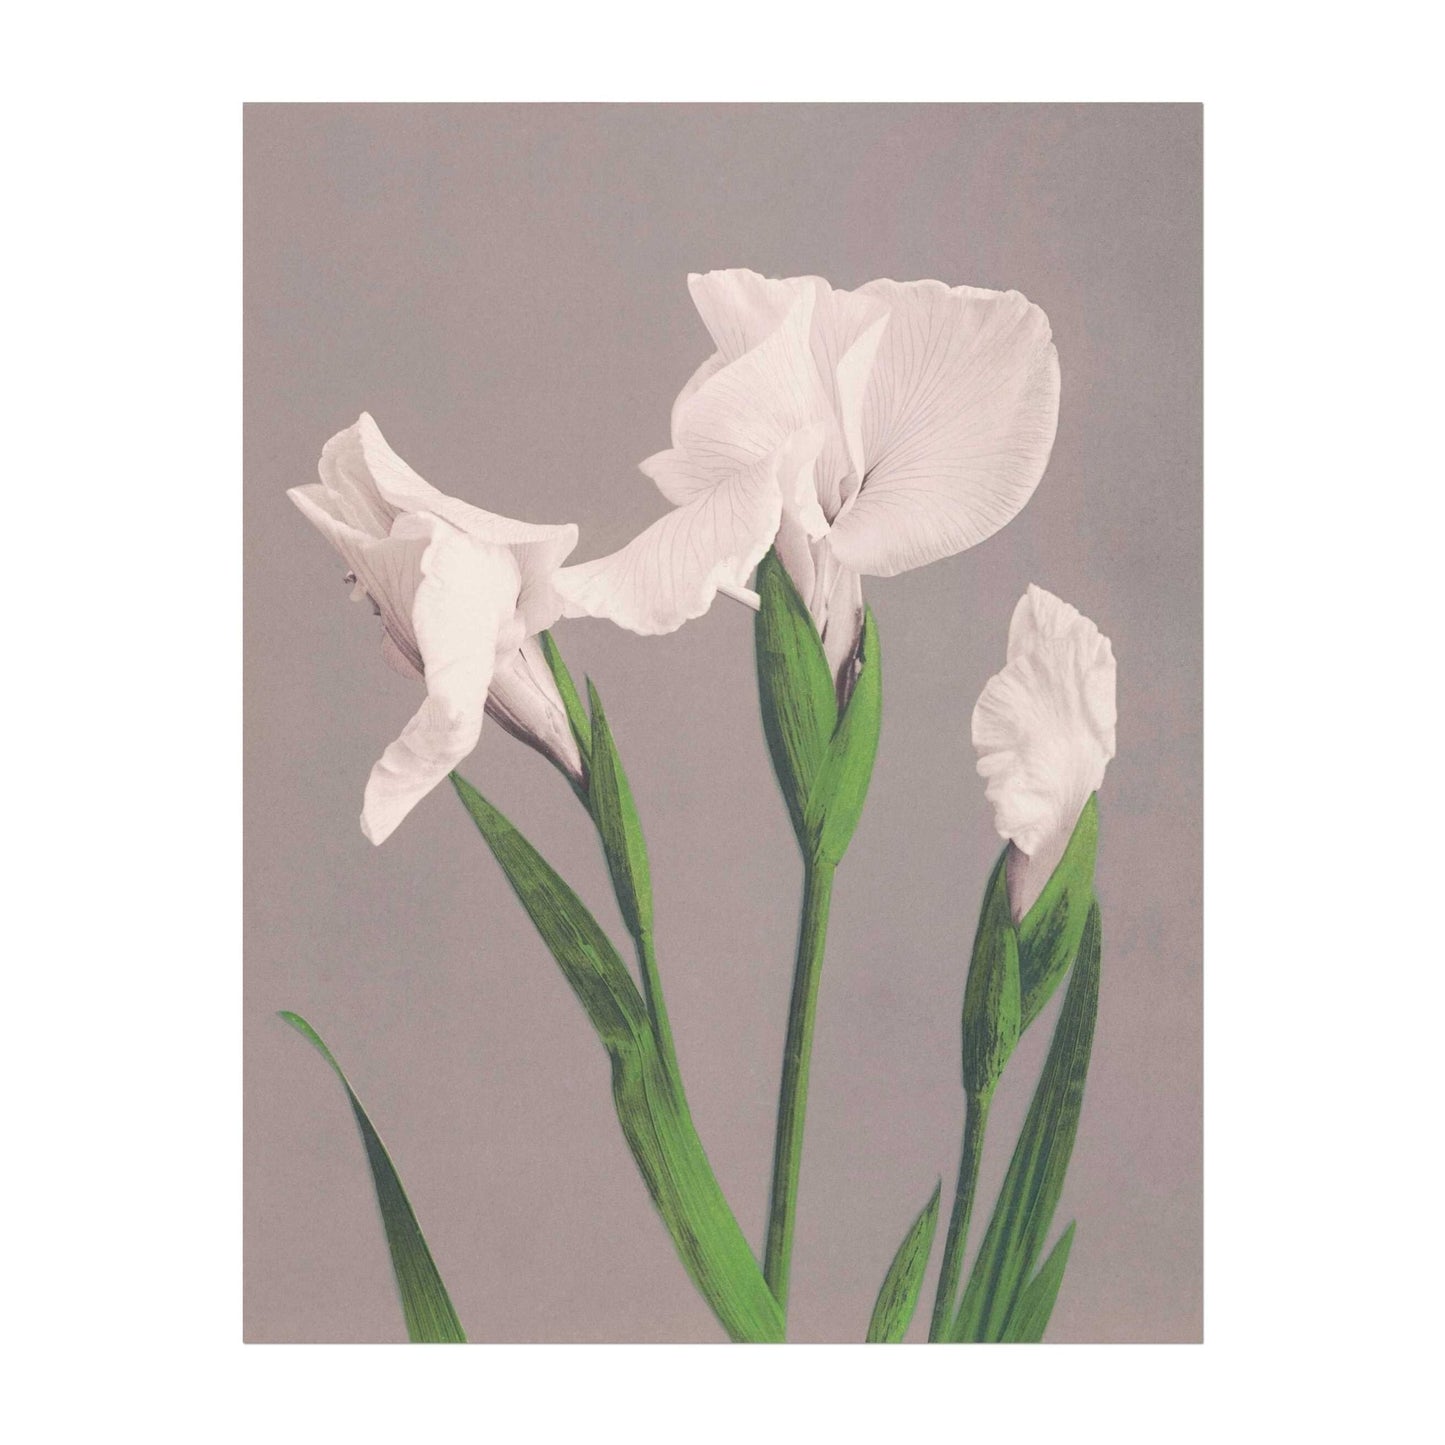 OGAWA KAZUMASA - White Irises